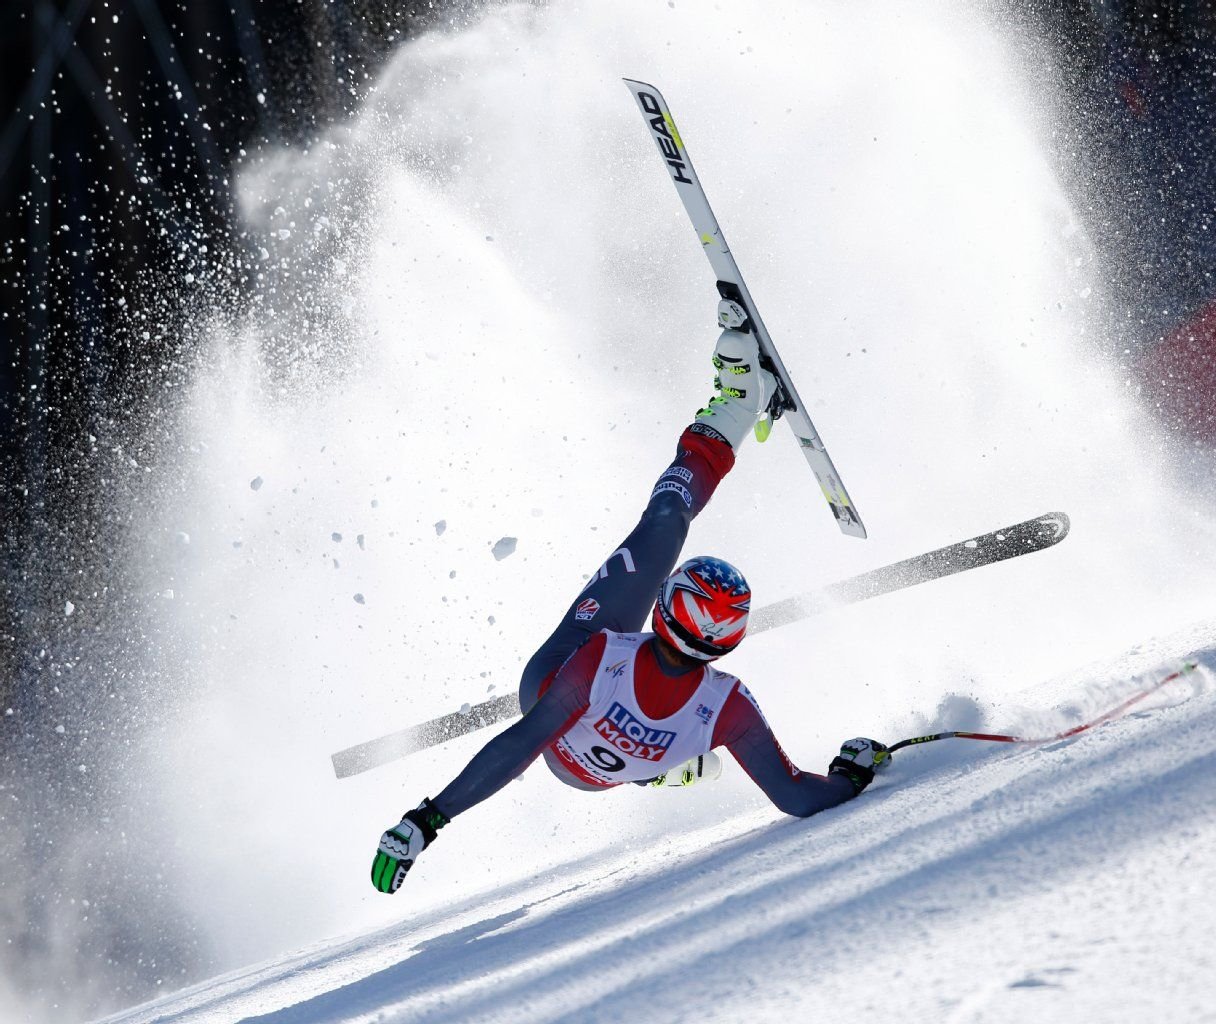 Ski alpin: Ski alpin: US-Skistar Bode Miller nach Horrorsturz operiert